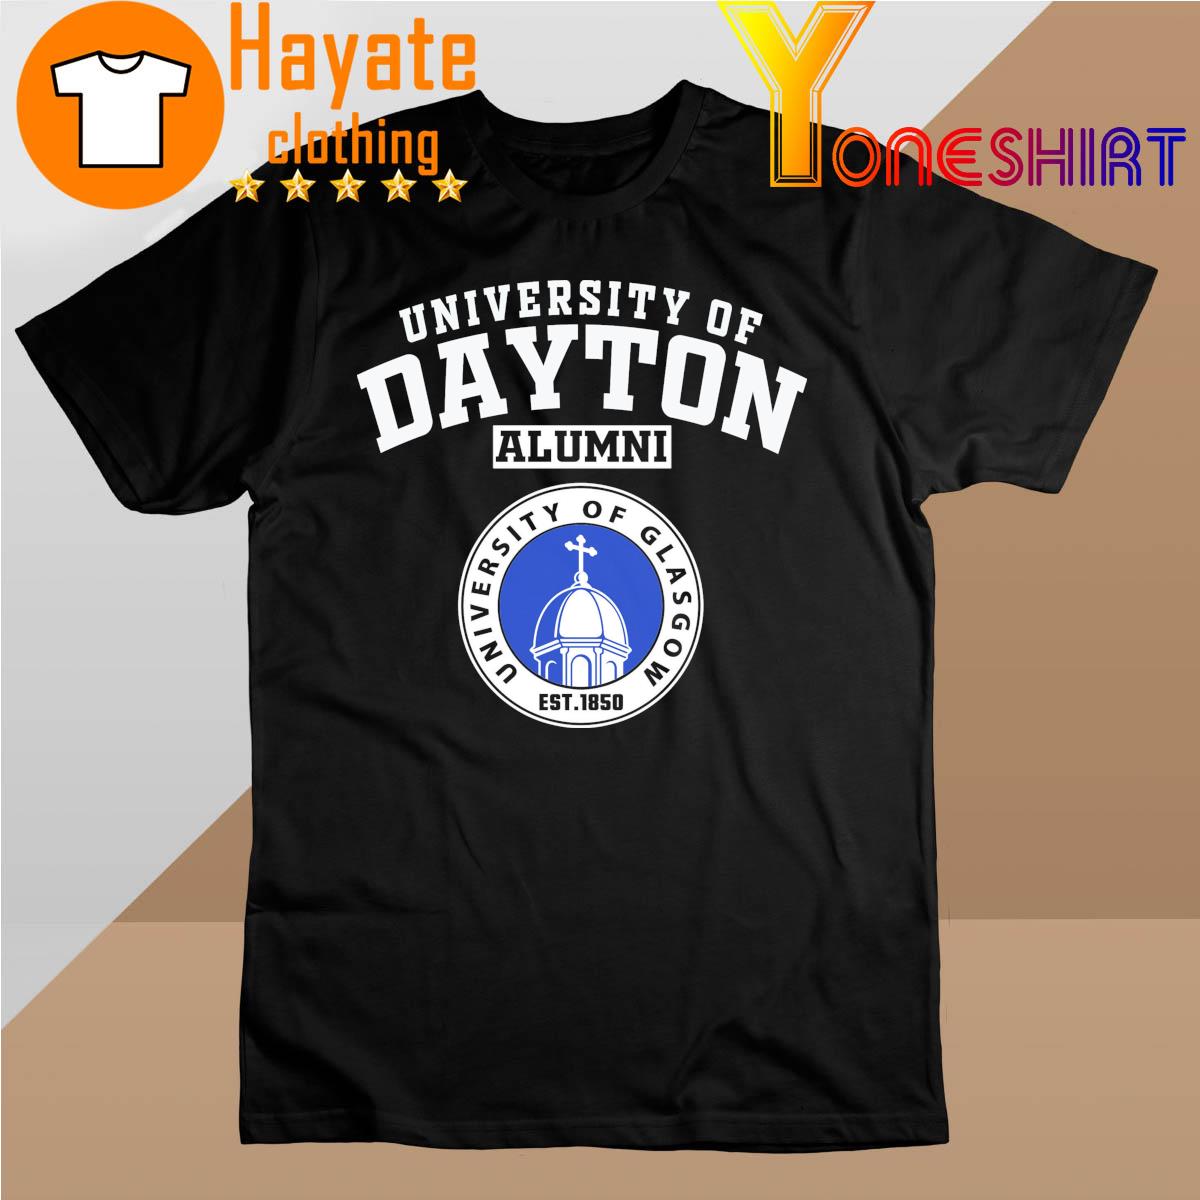 University of Dayton Alumni est 1850 shirt